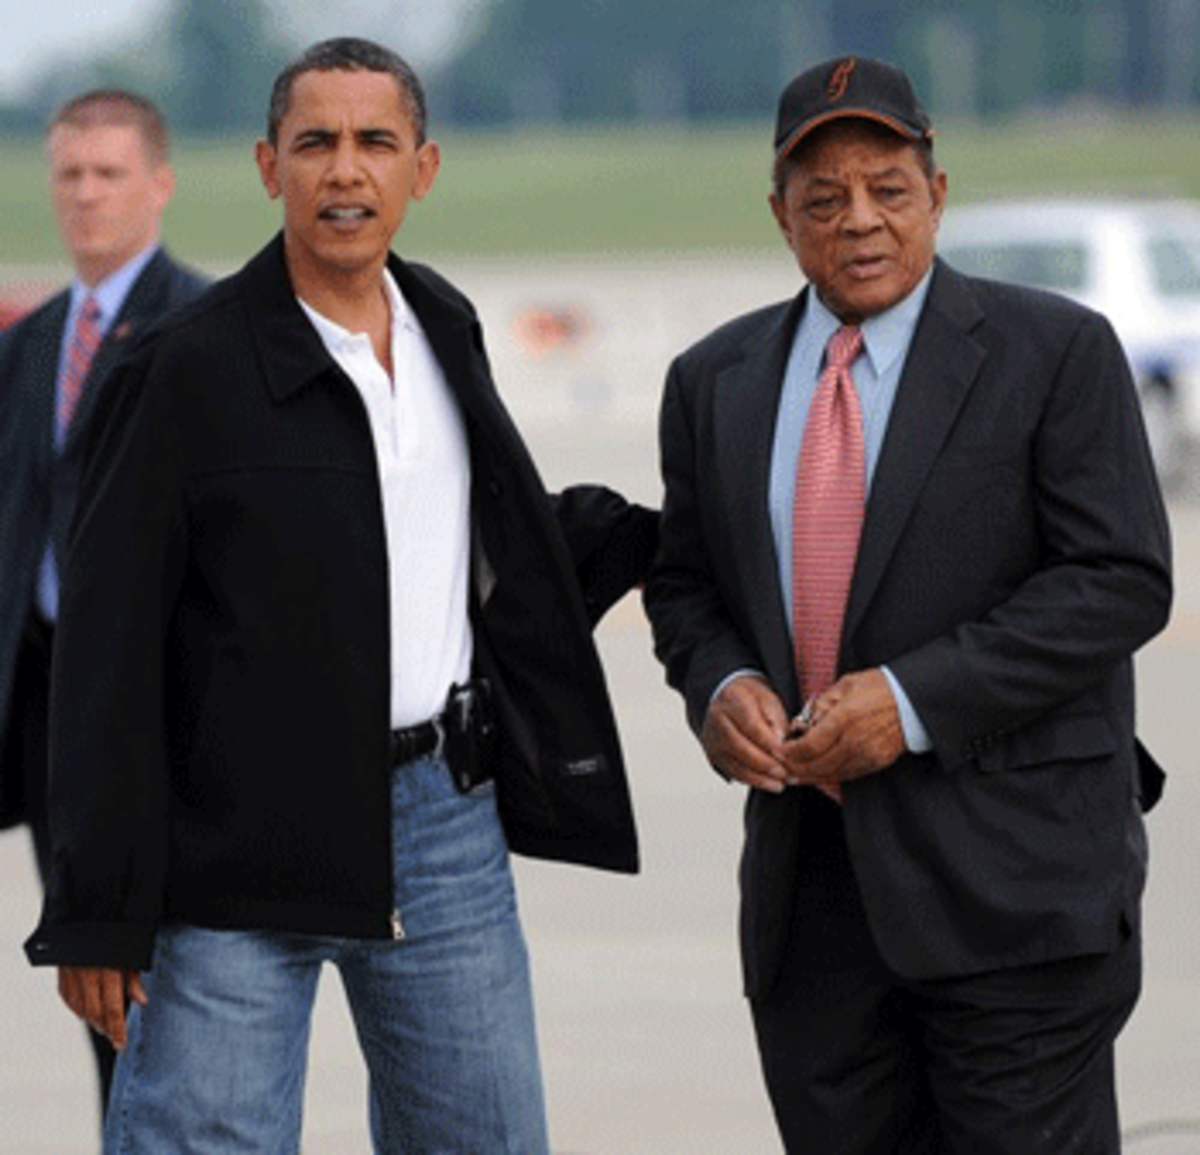 President Barack Obama and Willie Mays